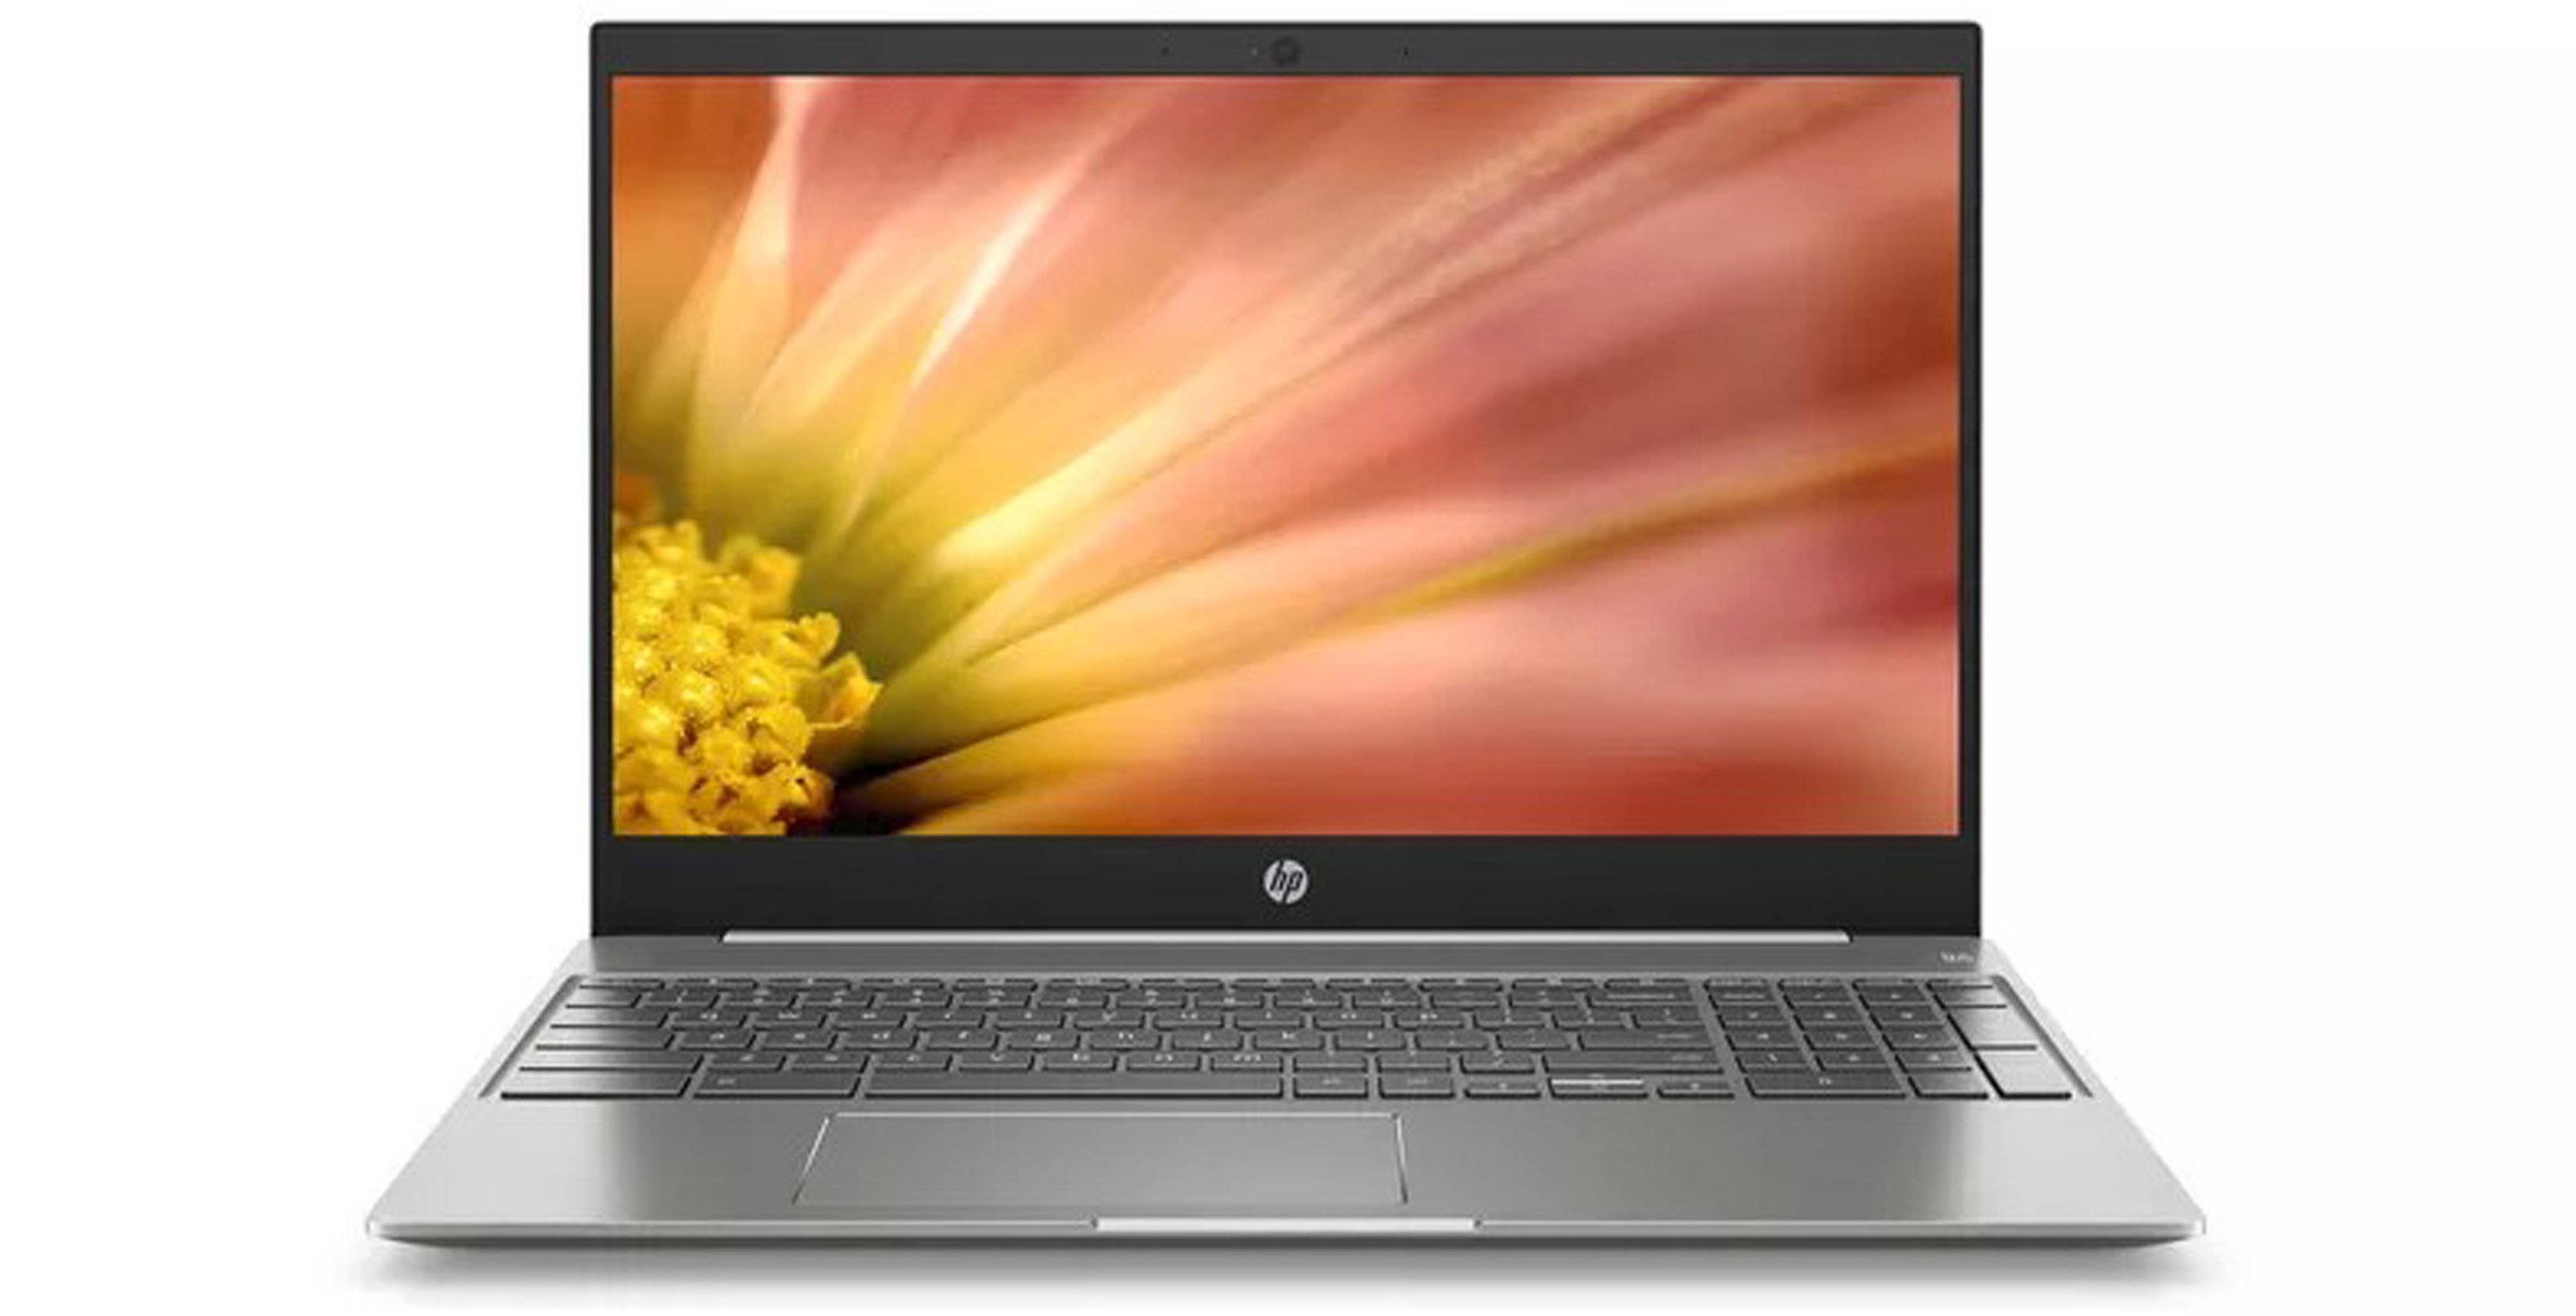 HP's Chromebook 15 laptop